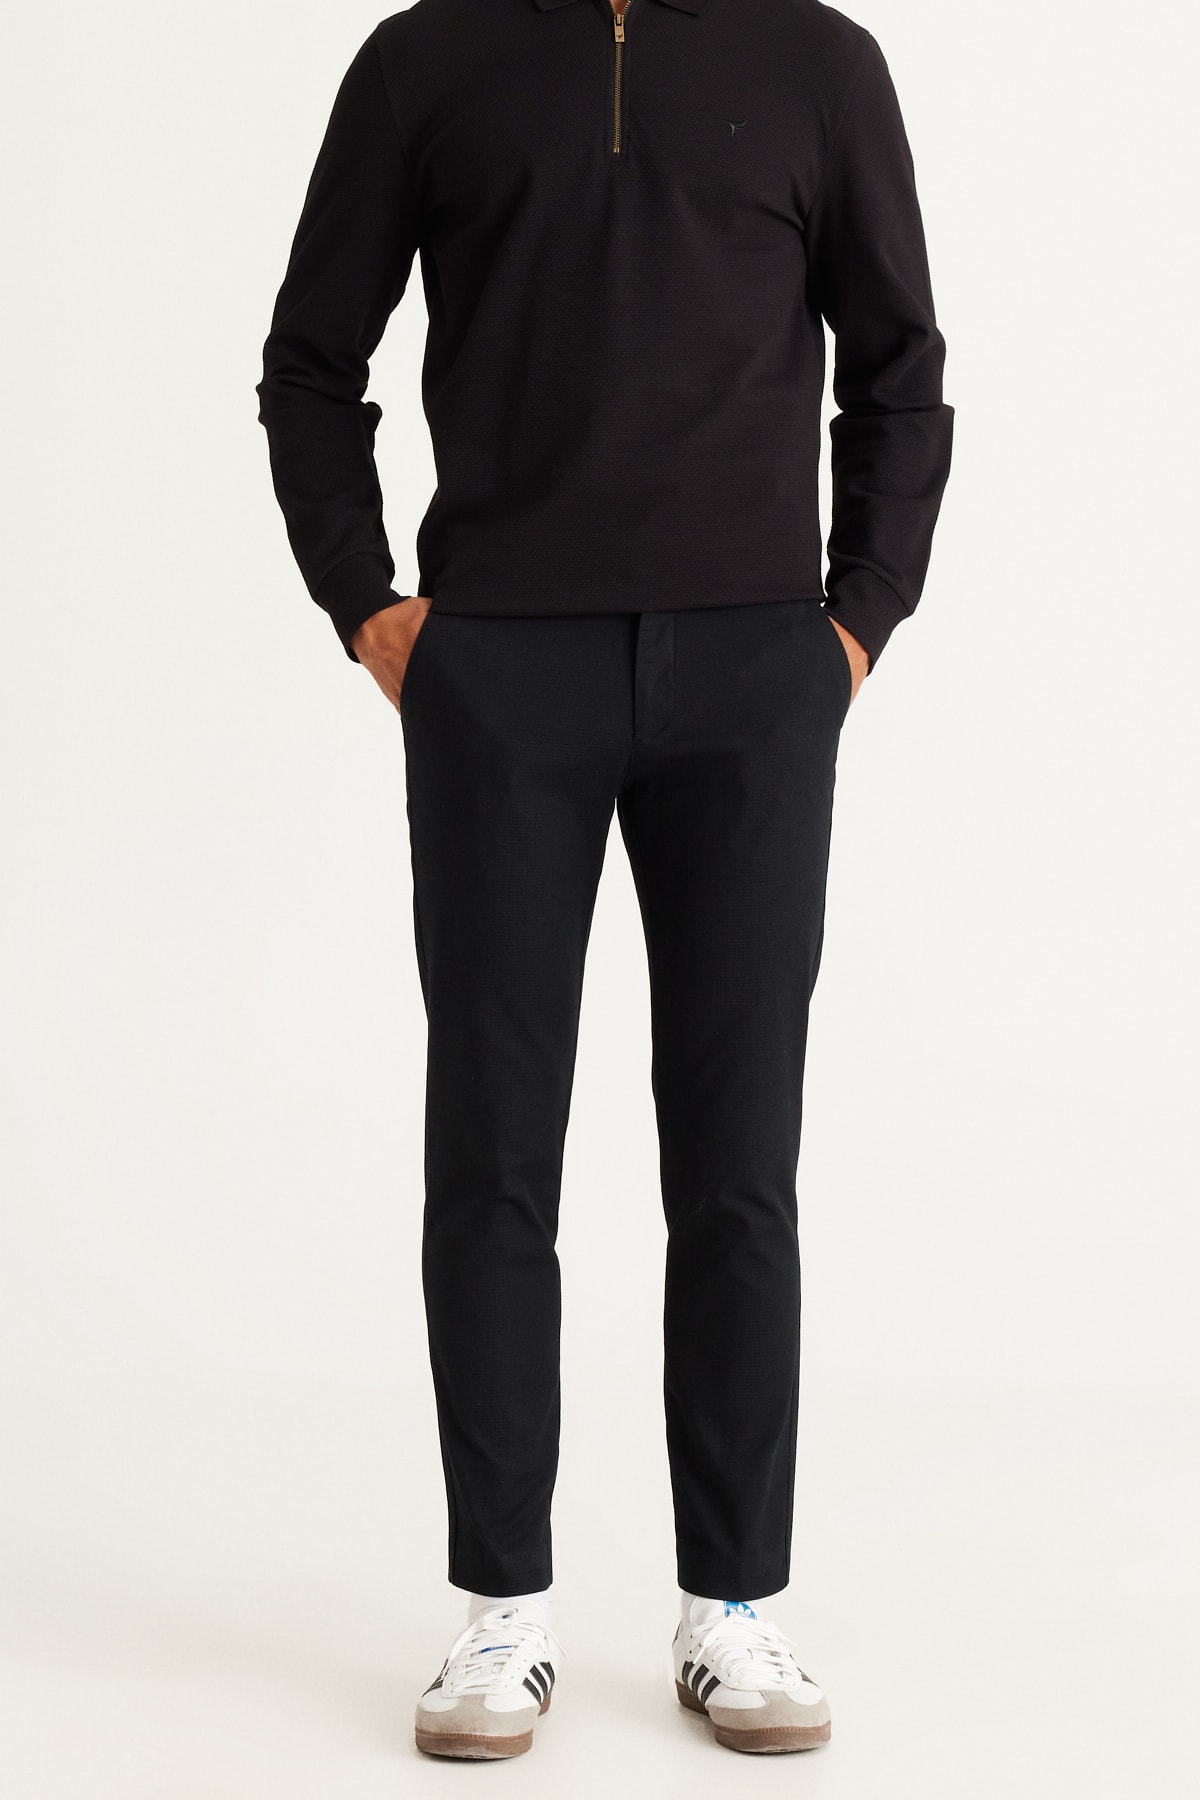 ALTINYILDIZ CLASSICS Men's Black Slim Fit Slim Fit Side Pockets Cotton Flexible Comfortable Dobby Pants